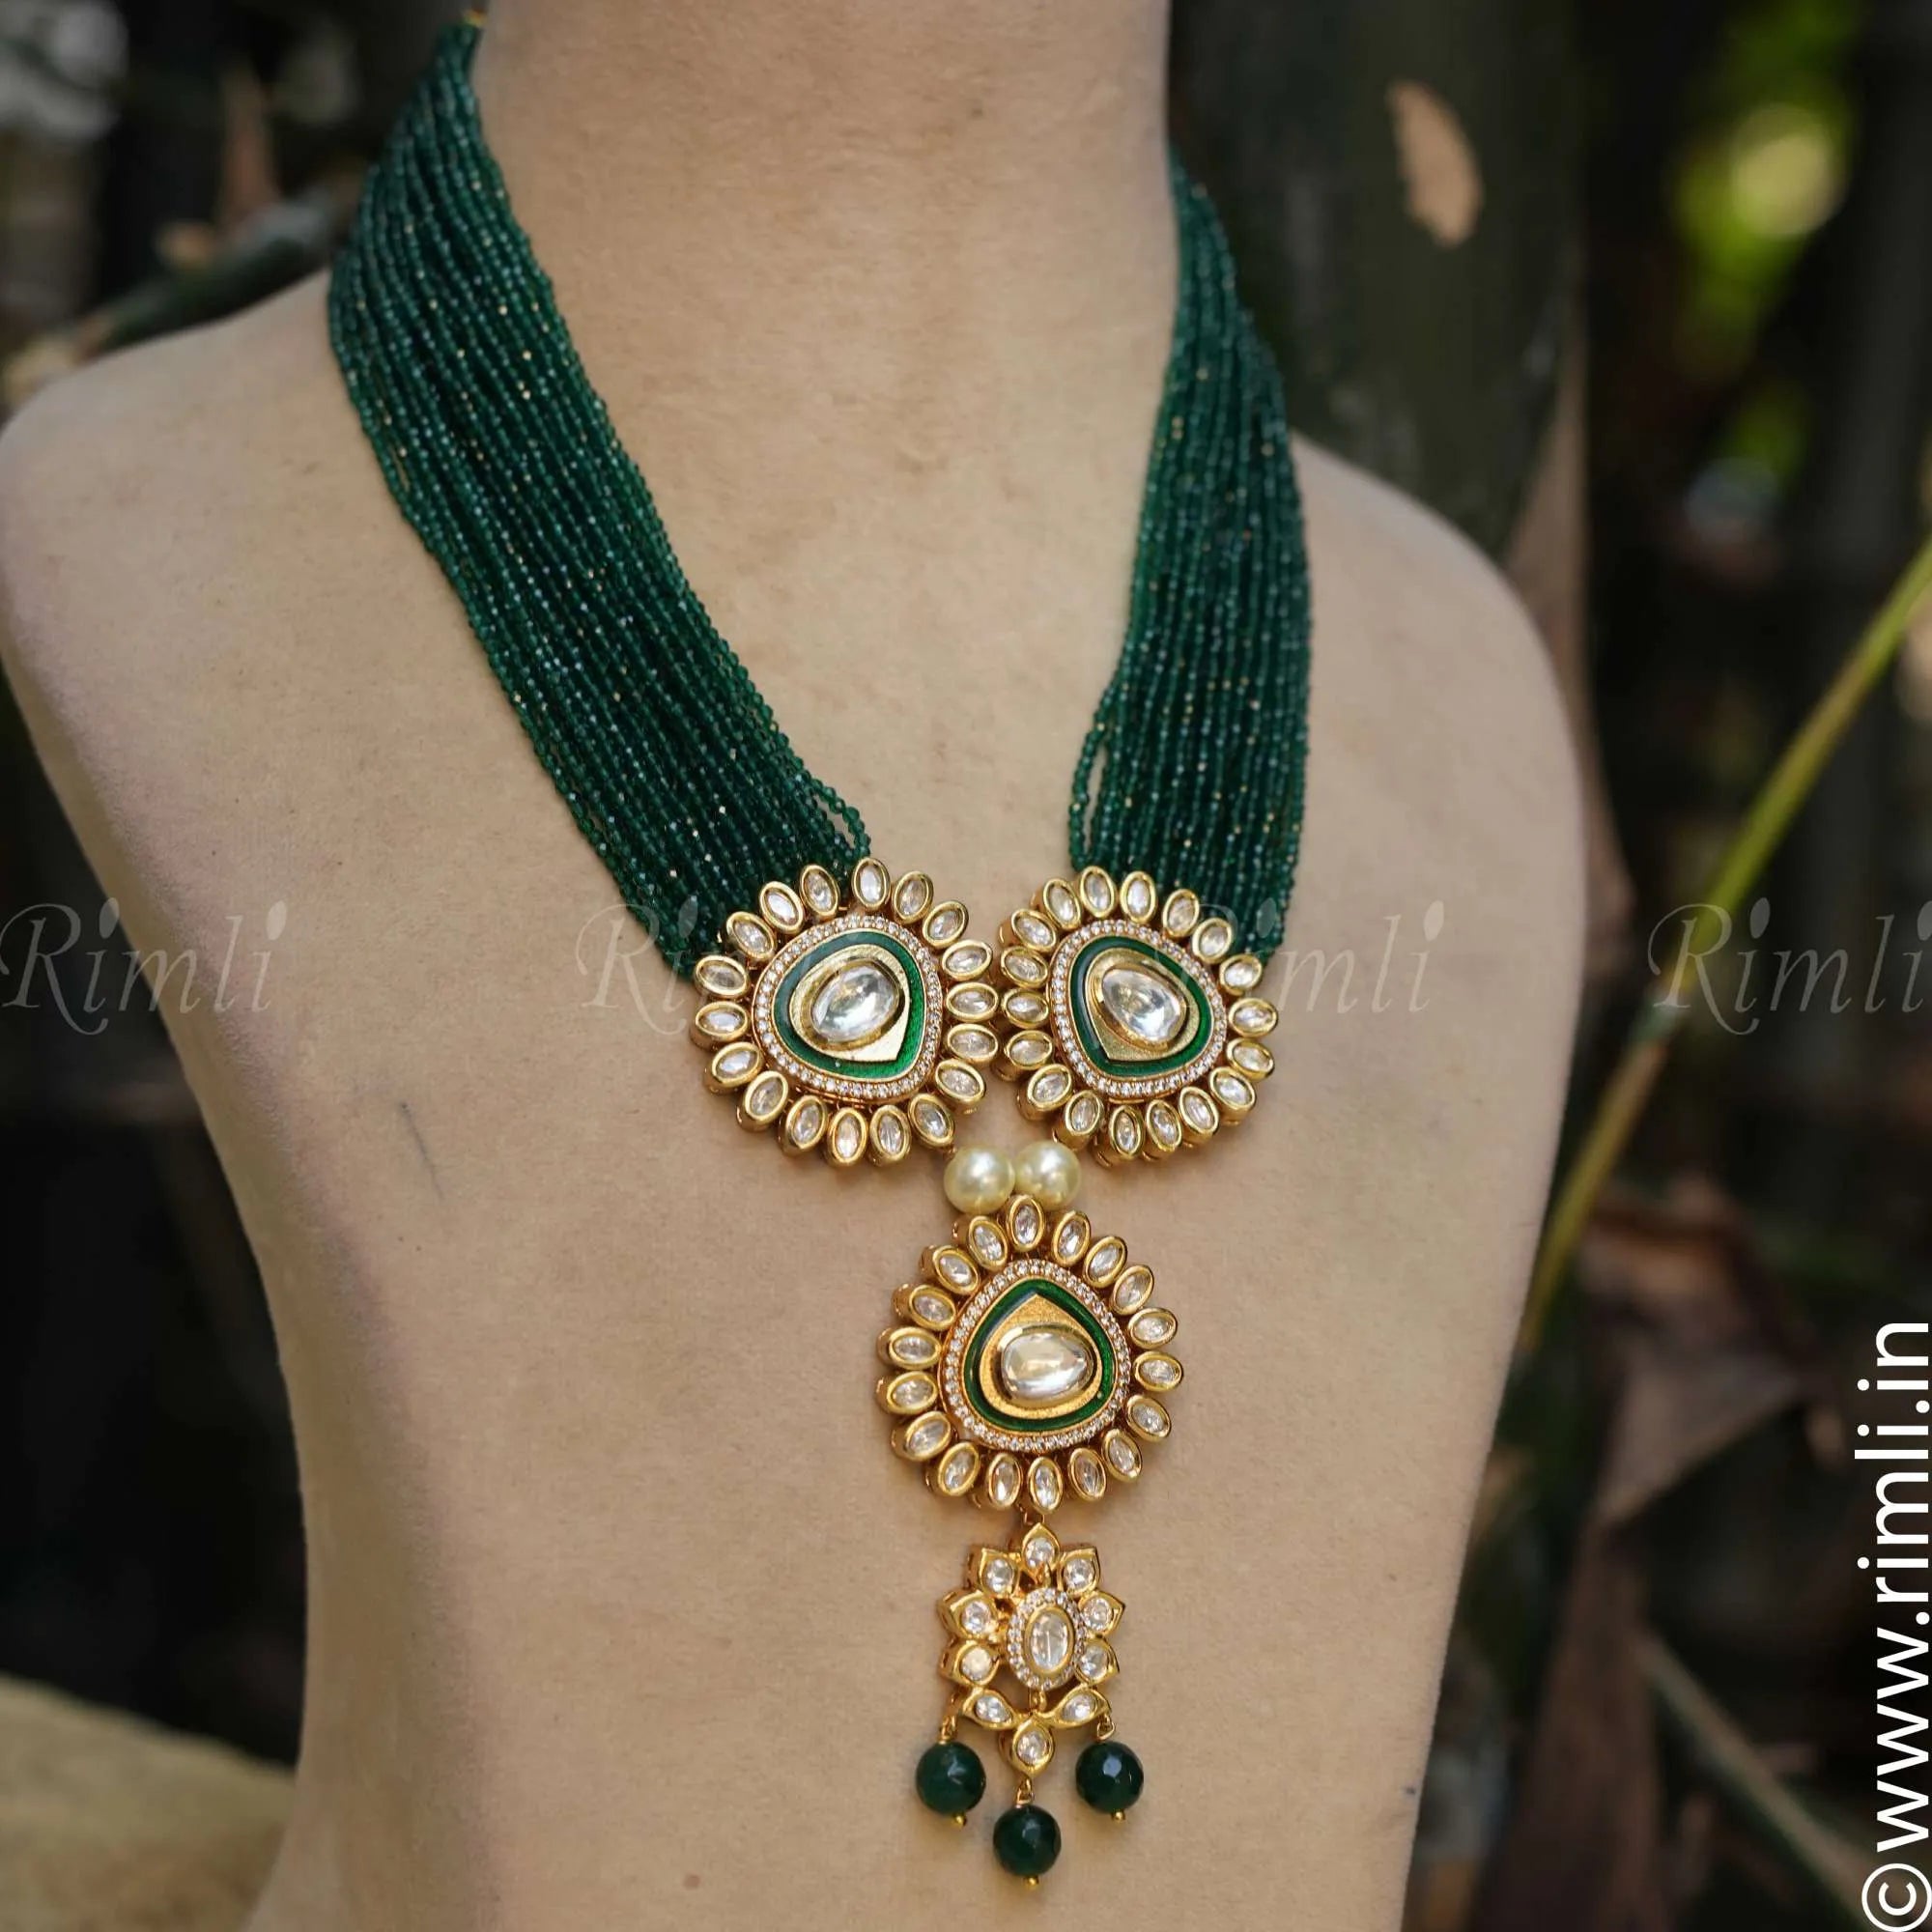 Ragini Beaded Necklace - Green